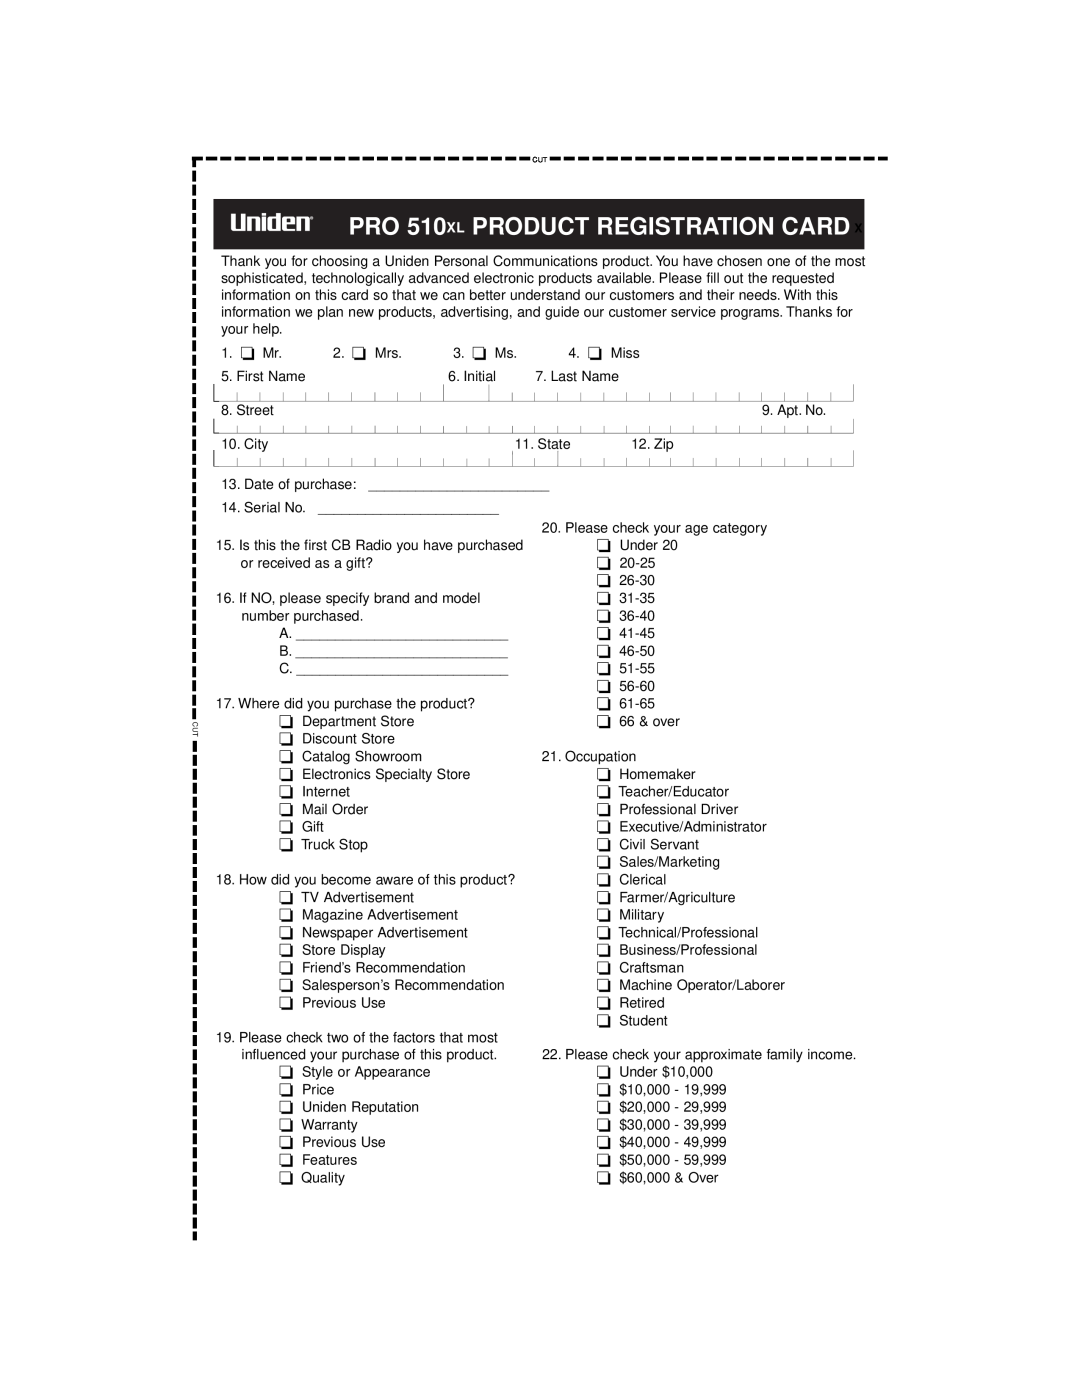 Uniden manual PRO 510XL PRODUCT REGISTRATION CARD 